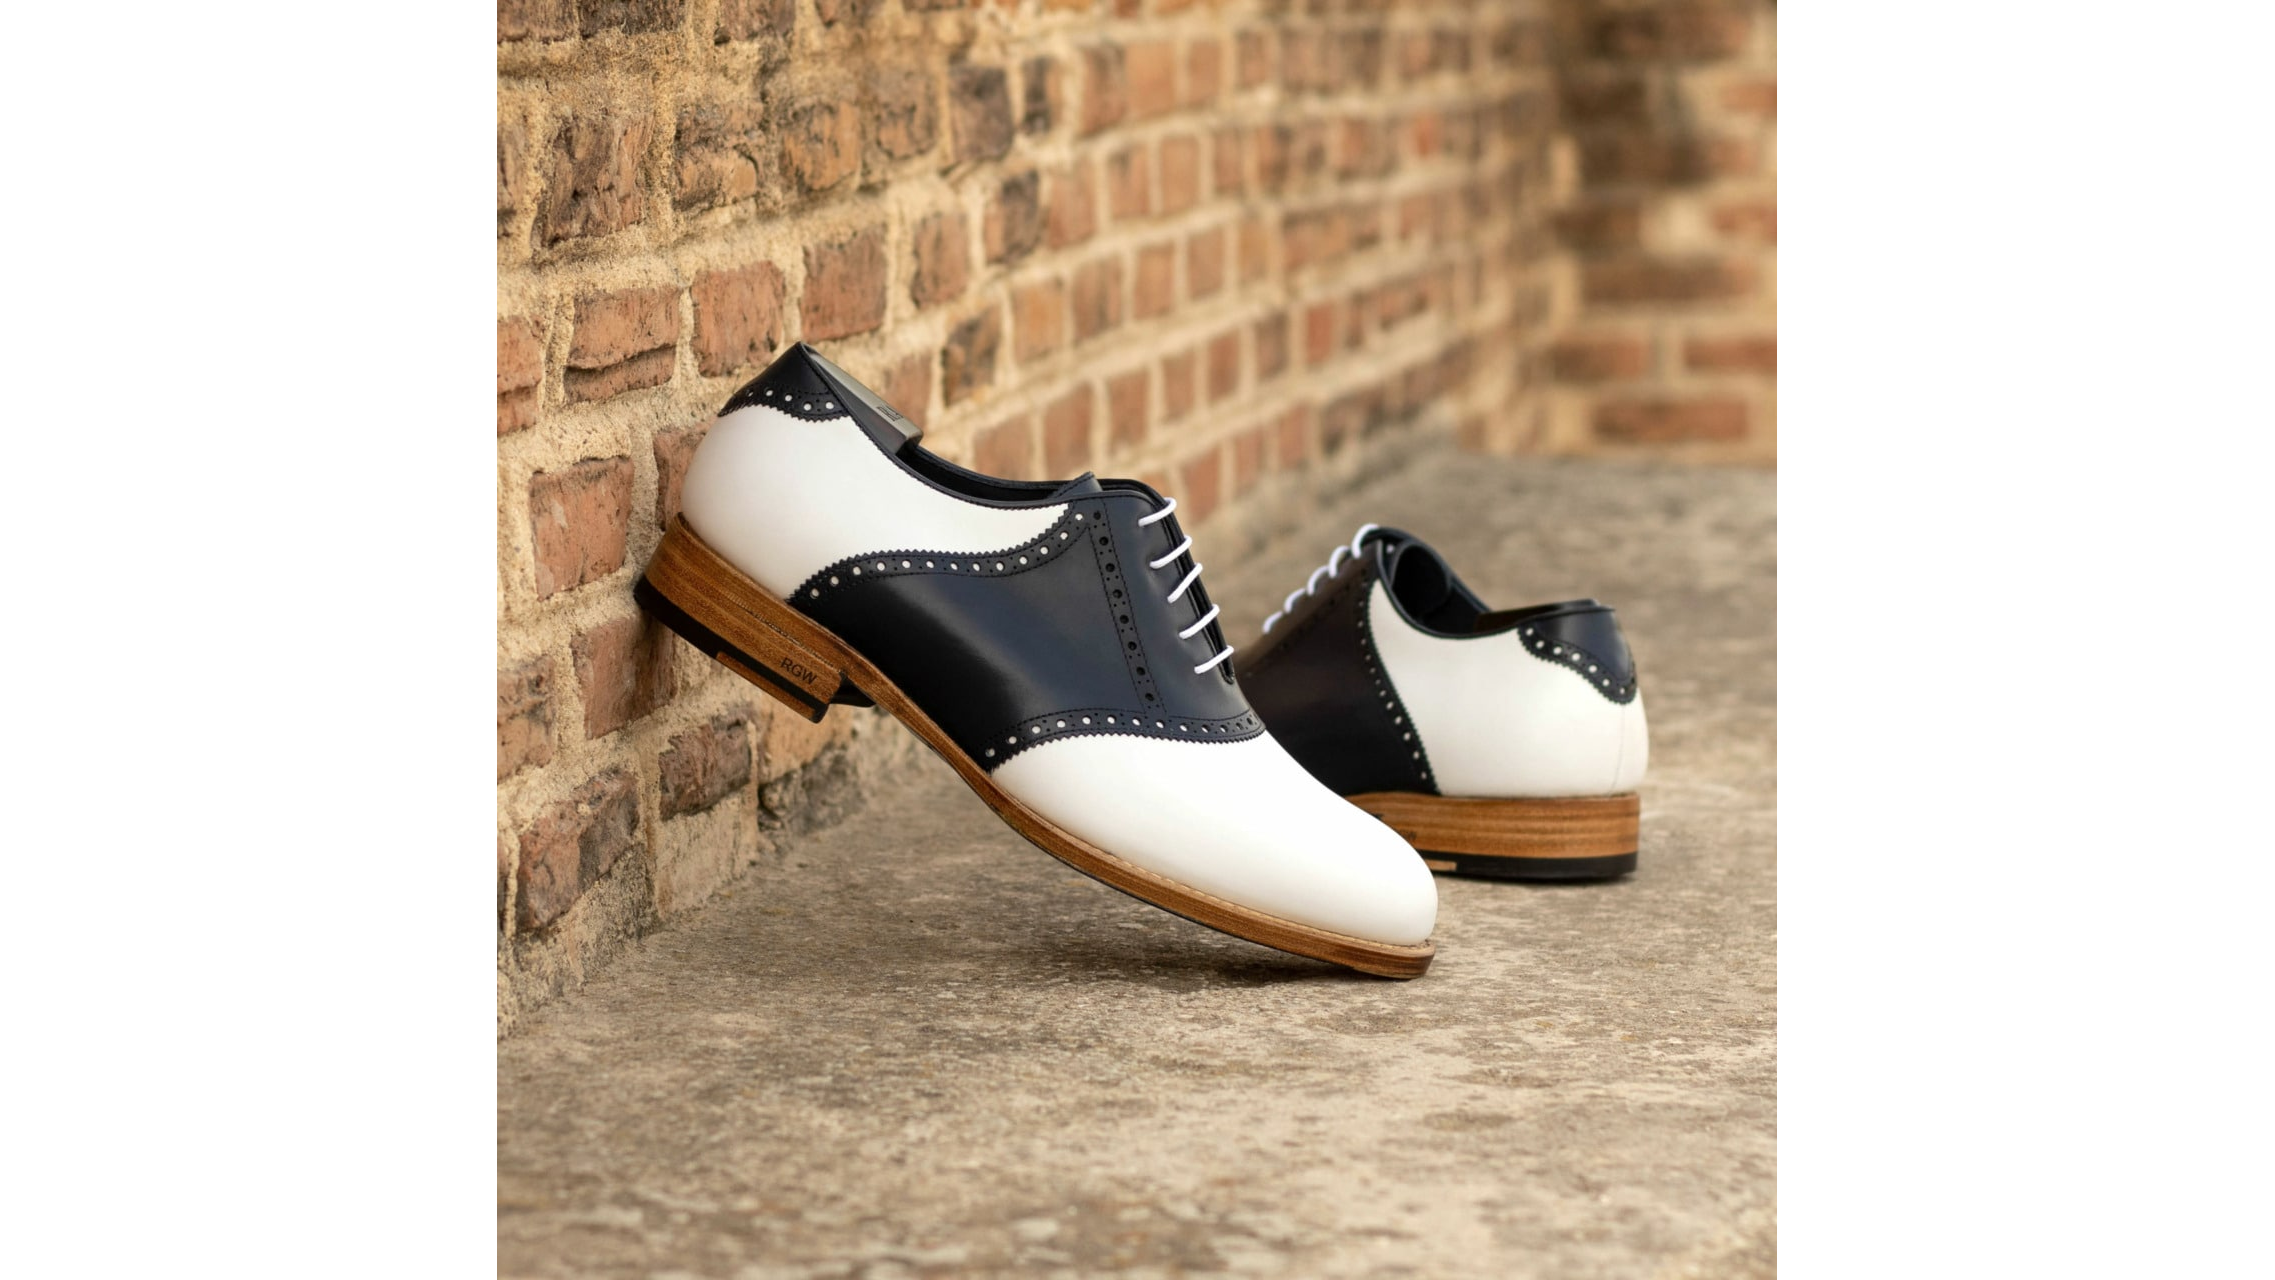 Design A Customized Luxury Leather Saddle Shoe - High-End Style & Free Shipping